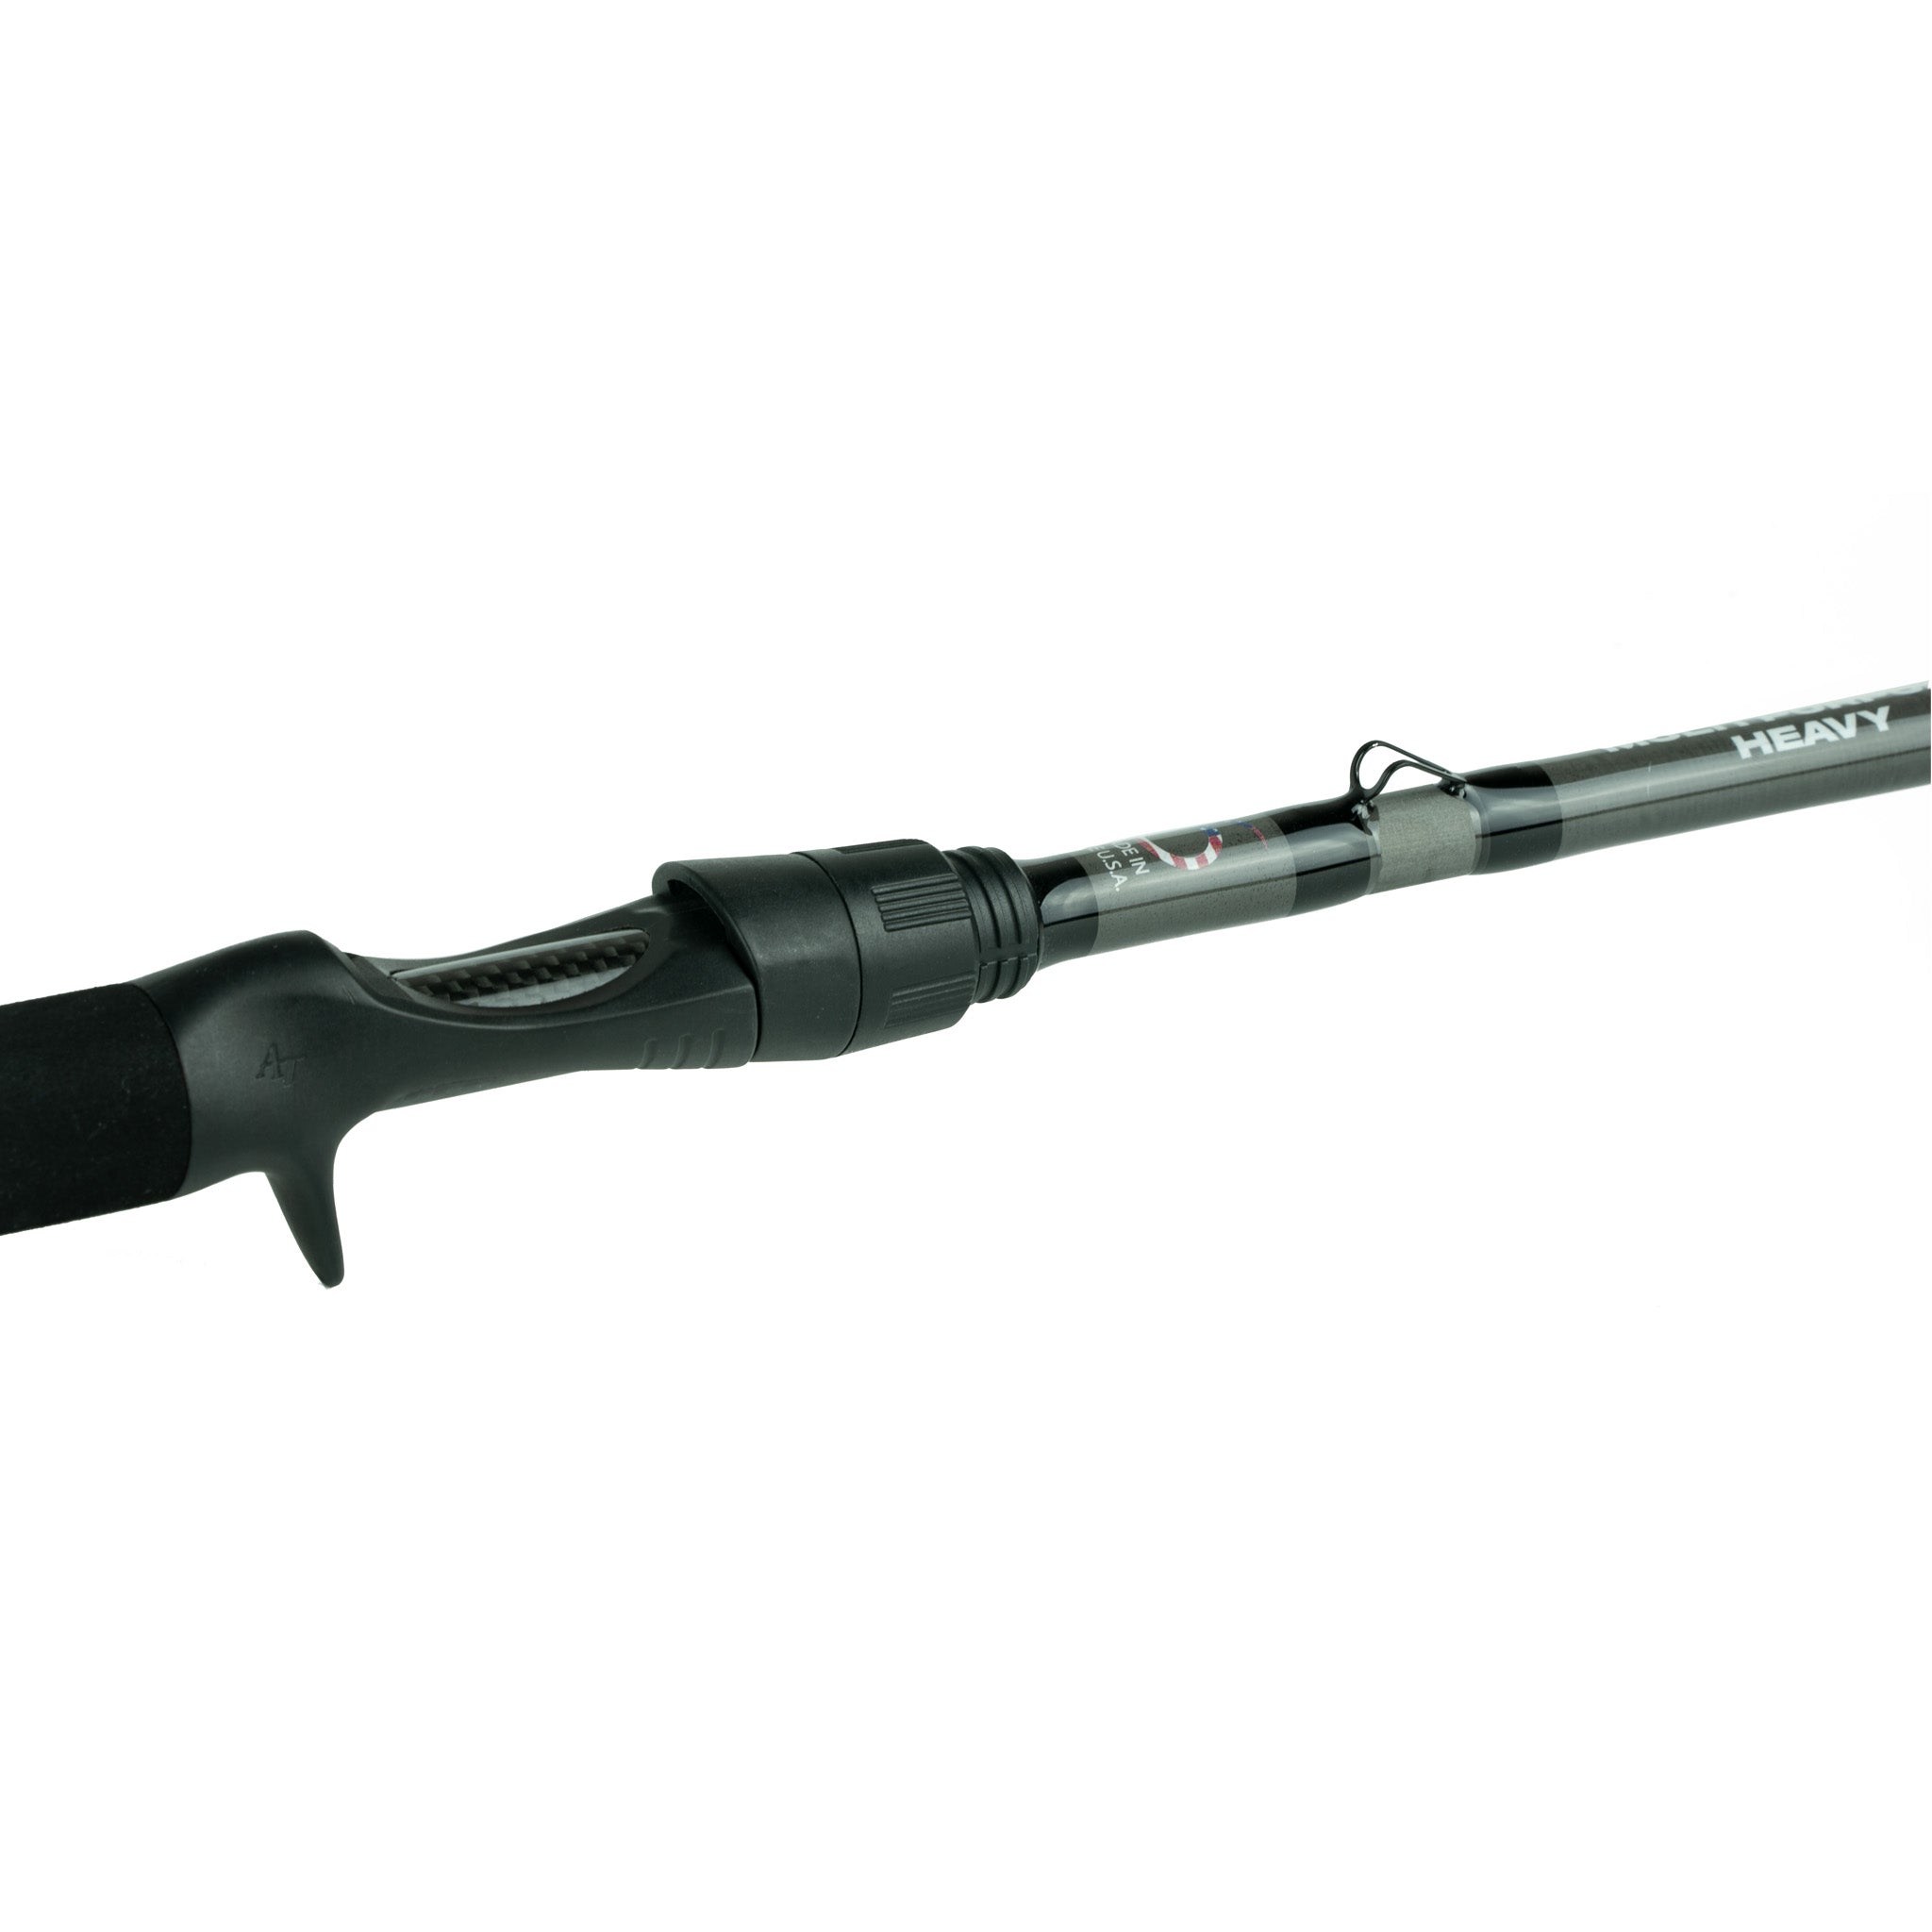 6th Sense USA Custom Series Rods 7' 11 Multi-Purpose Heavy/Mod-Fast